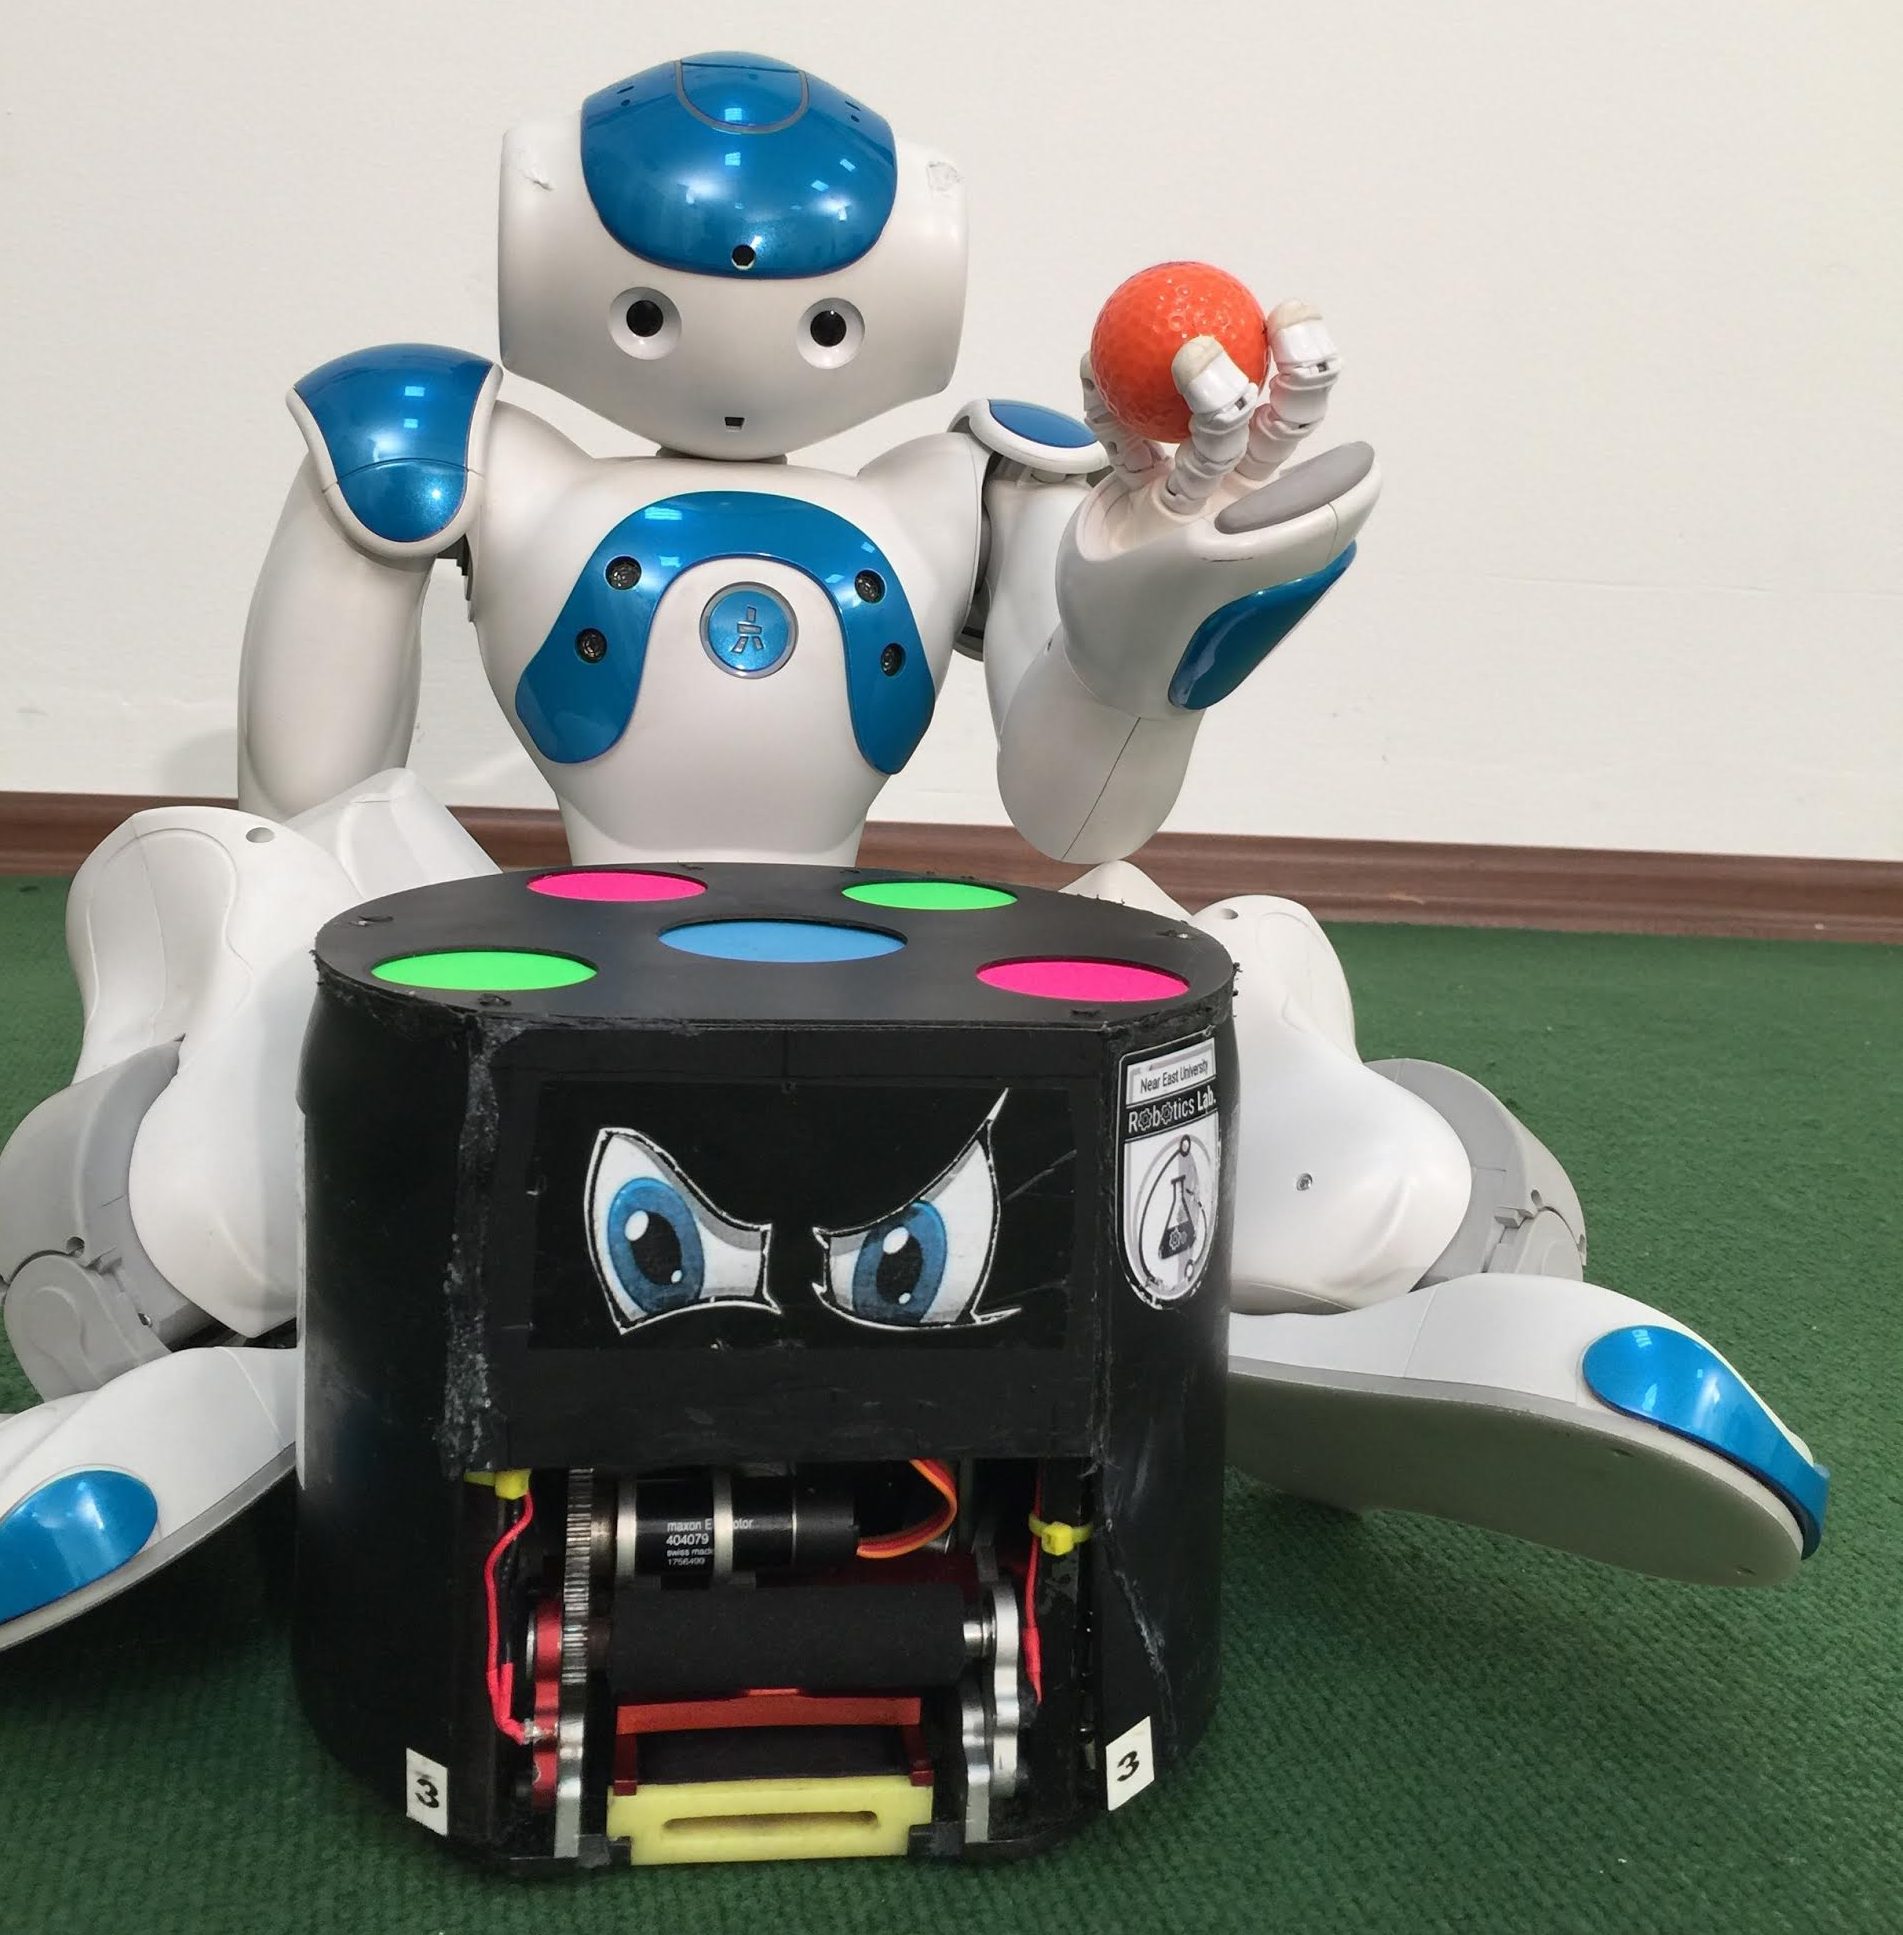 NEUIslanders Robot Football Team is making final preparations before the World Championship